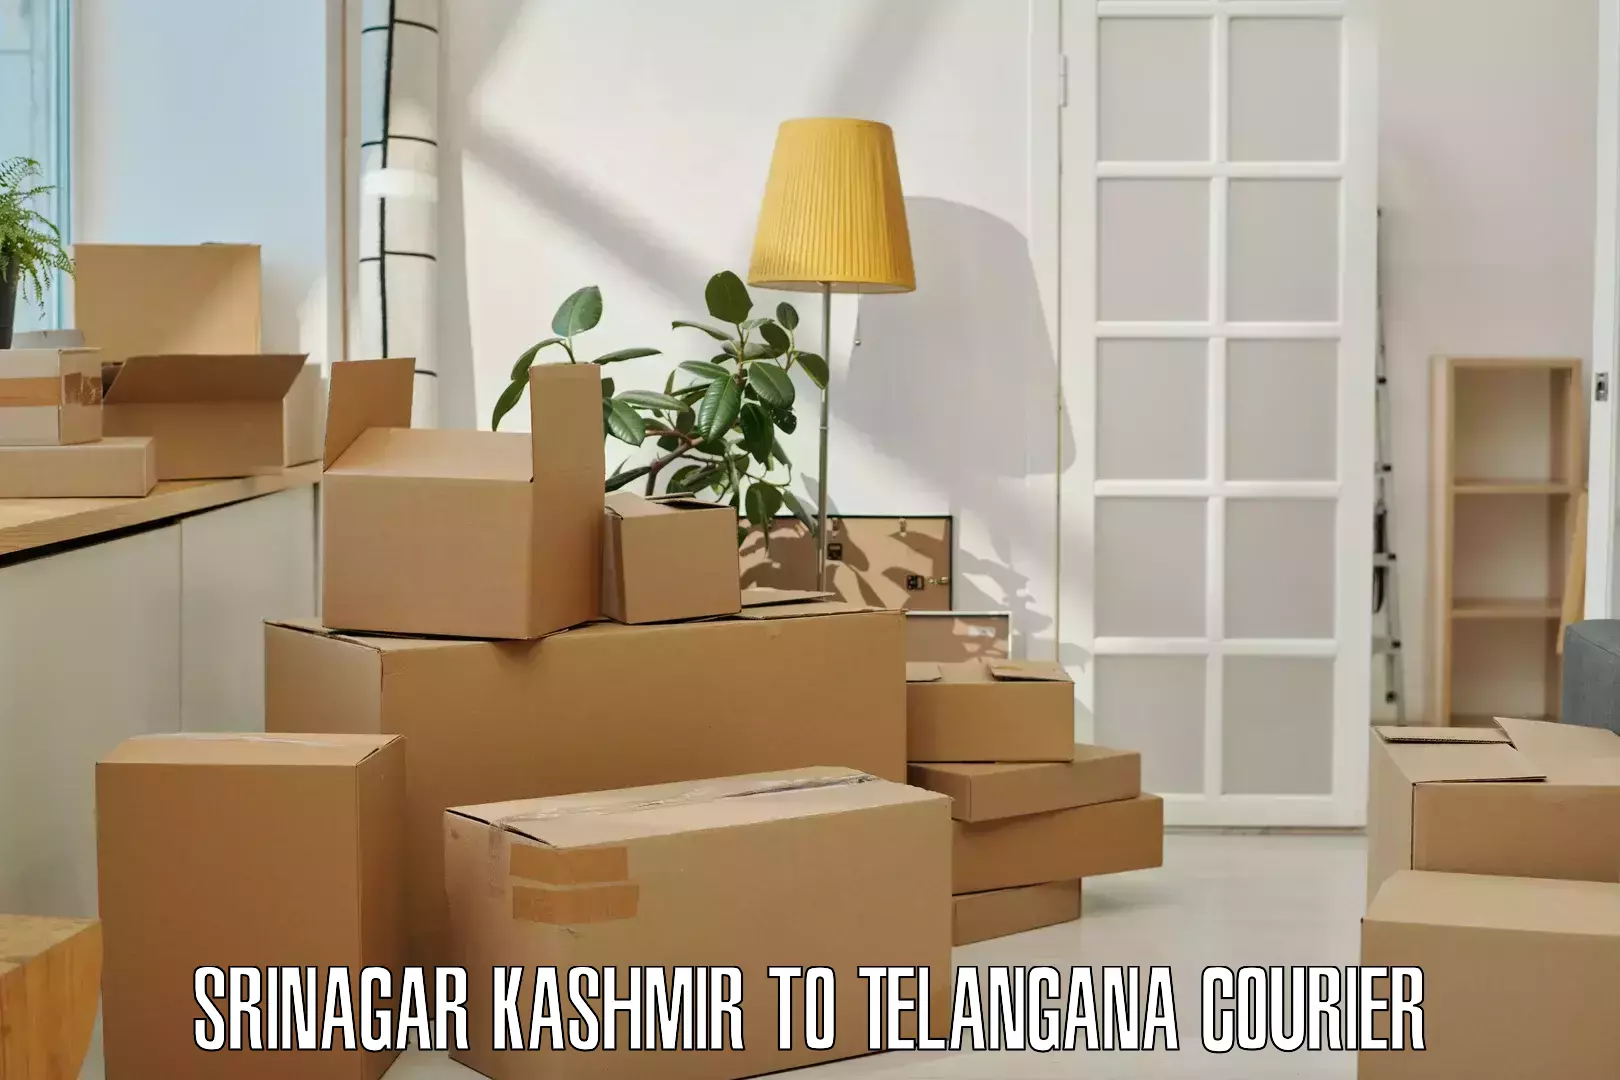 Local delivery service Srinagar Kashmir to Veenavanka